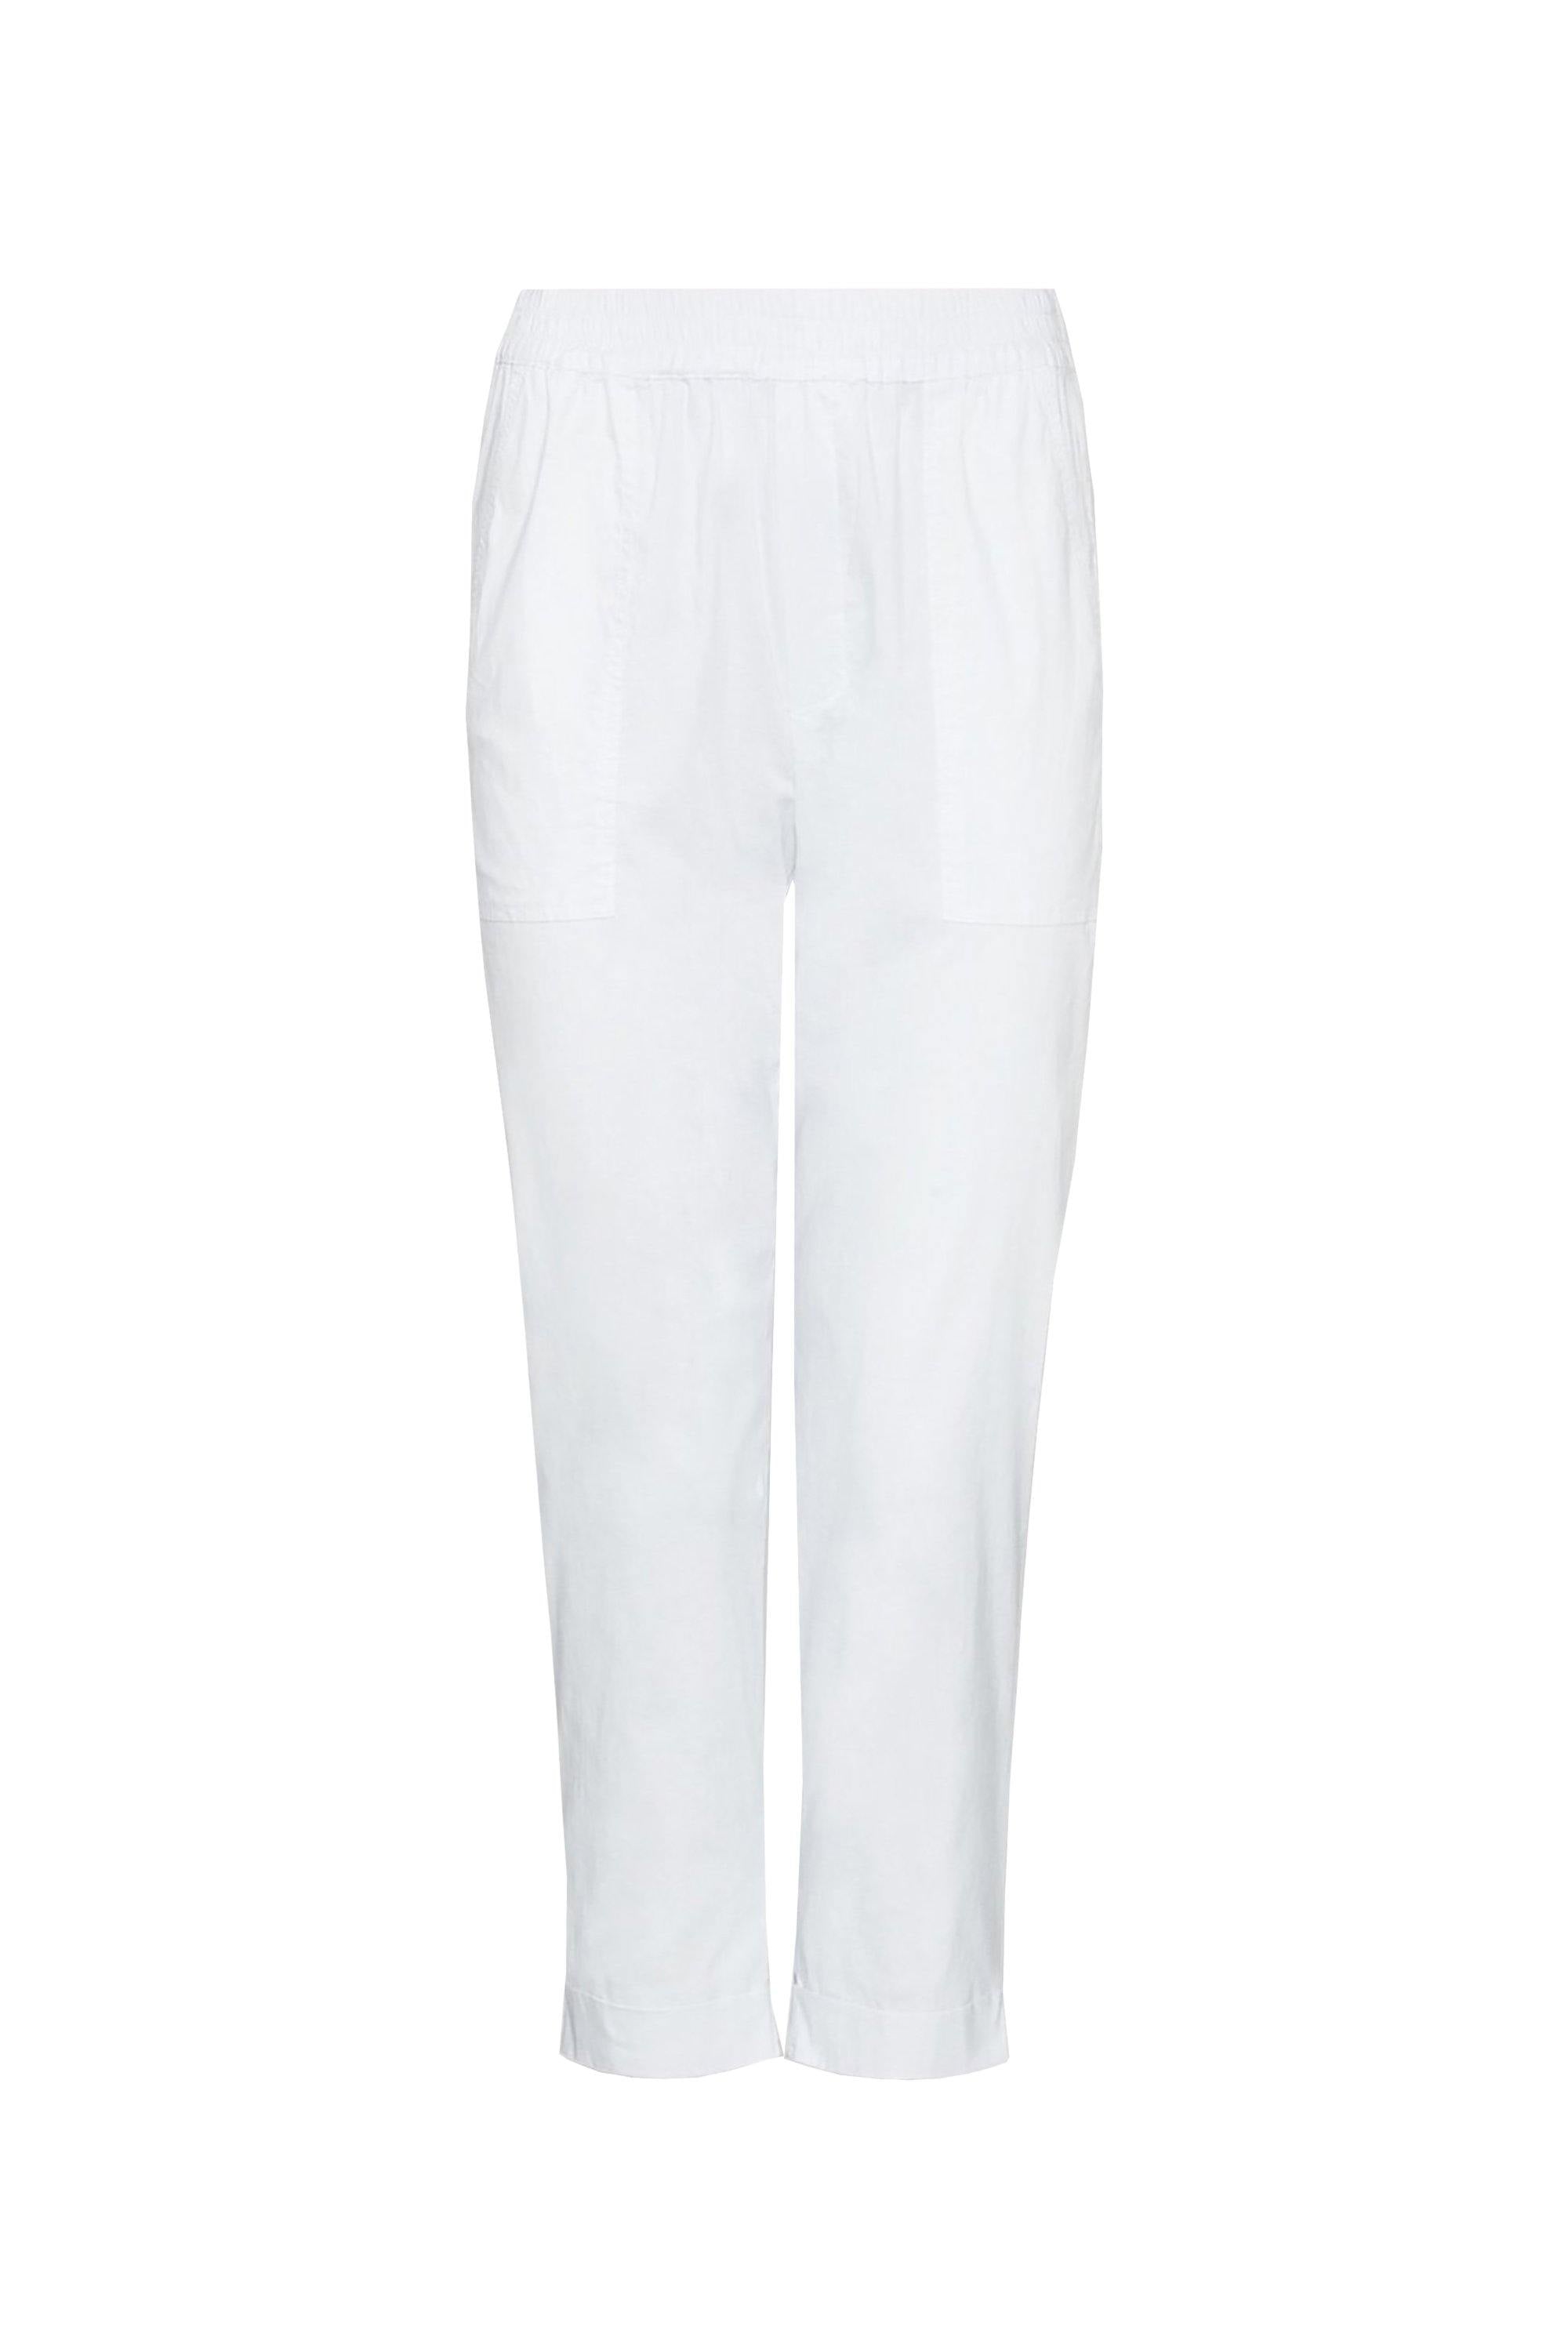 Acrobat Essex Pant - White - Pant VERGE